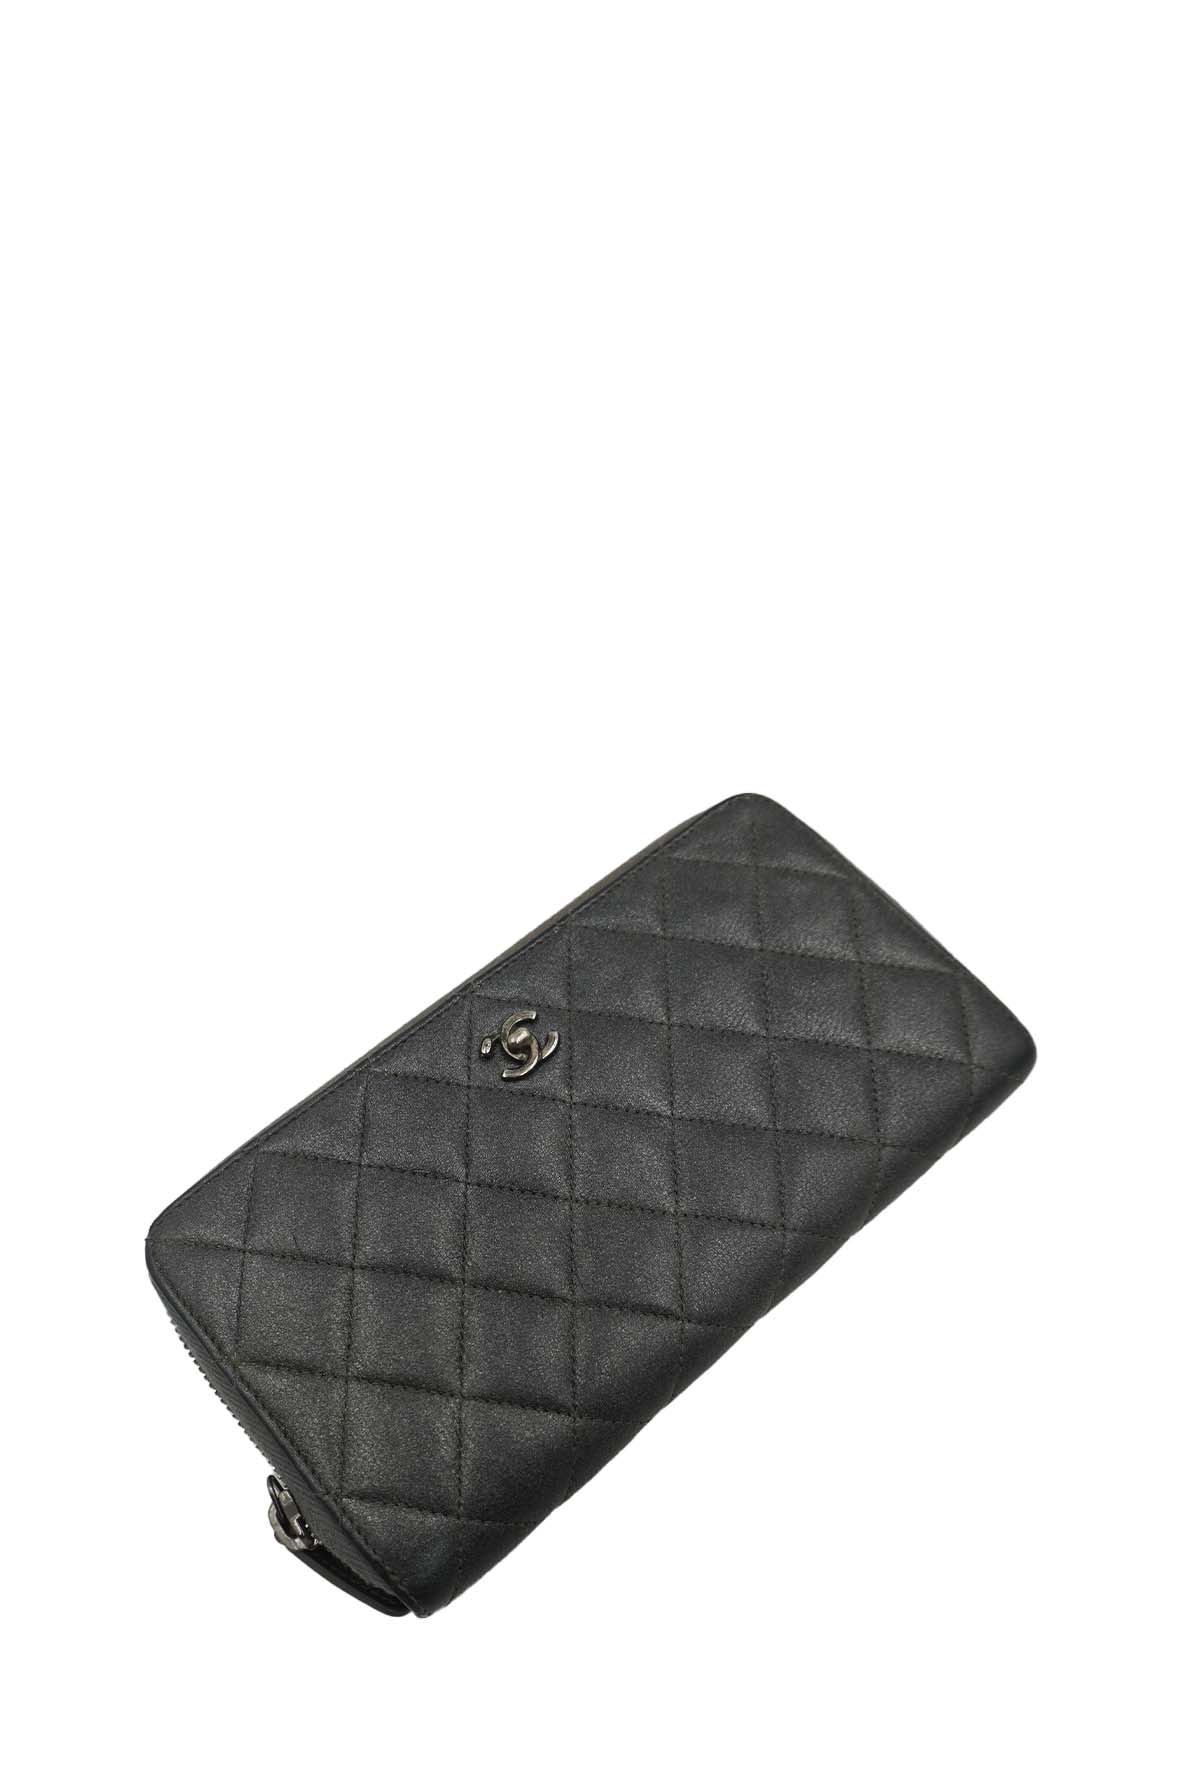 Chanel Classic Zip Wallet AP3337 B10738 94305, Black, One Size